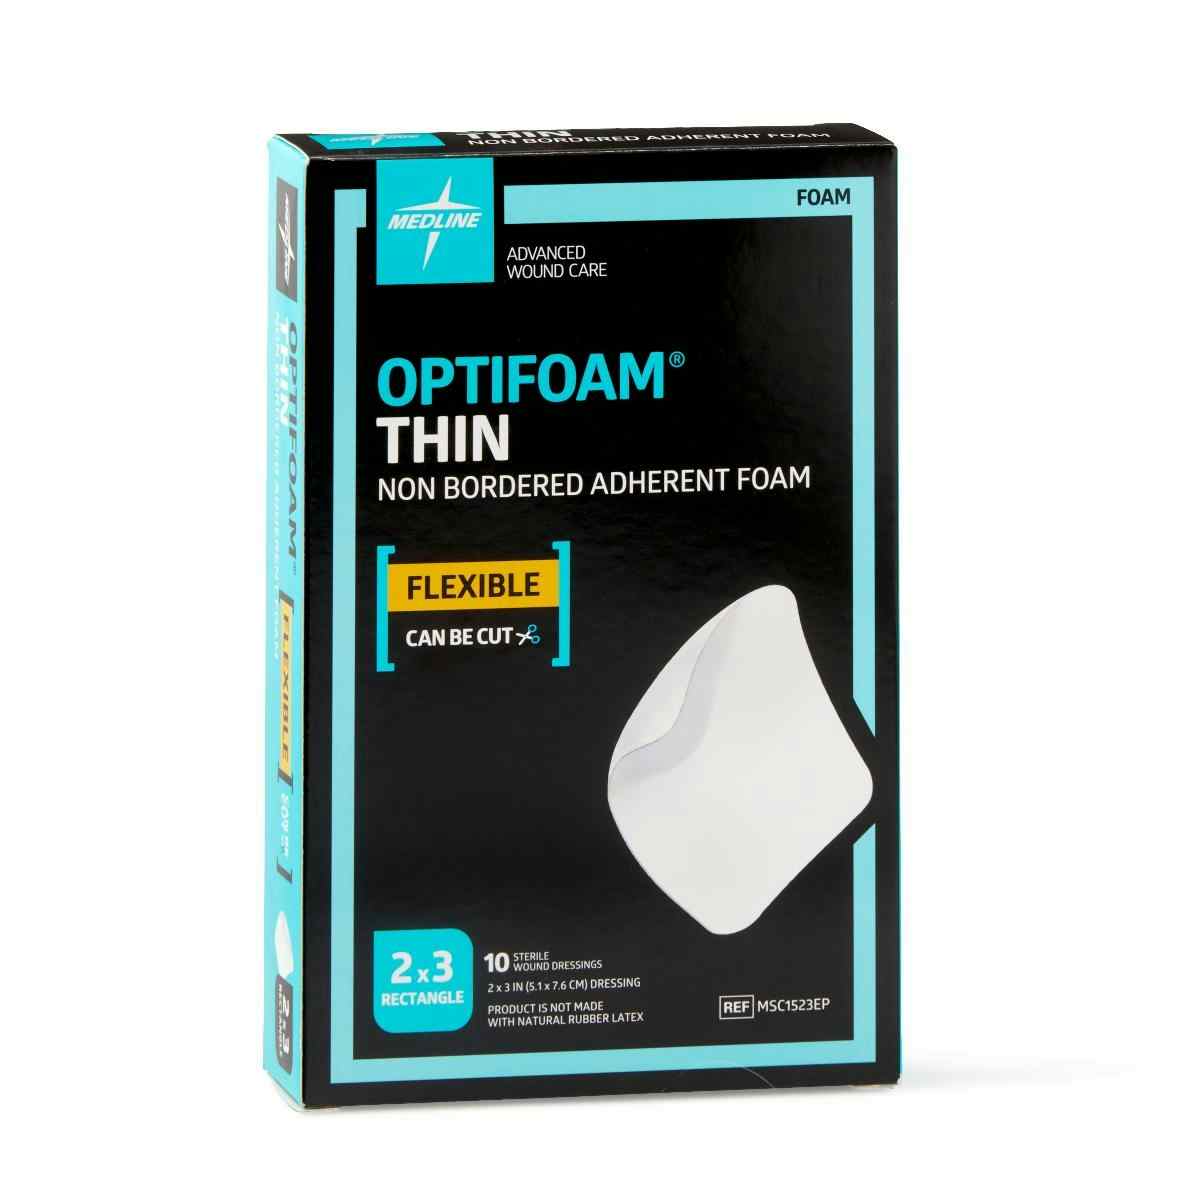 Medline Optifoam Thin Non Bordered Adhesive Foam Dressing, MSC1523EPZ, 2" X 3" - Box of 10